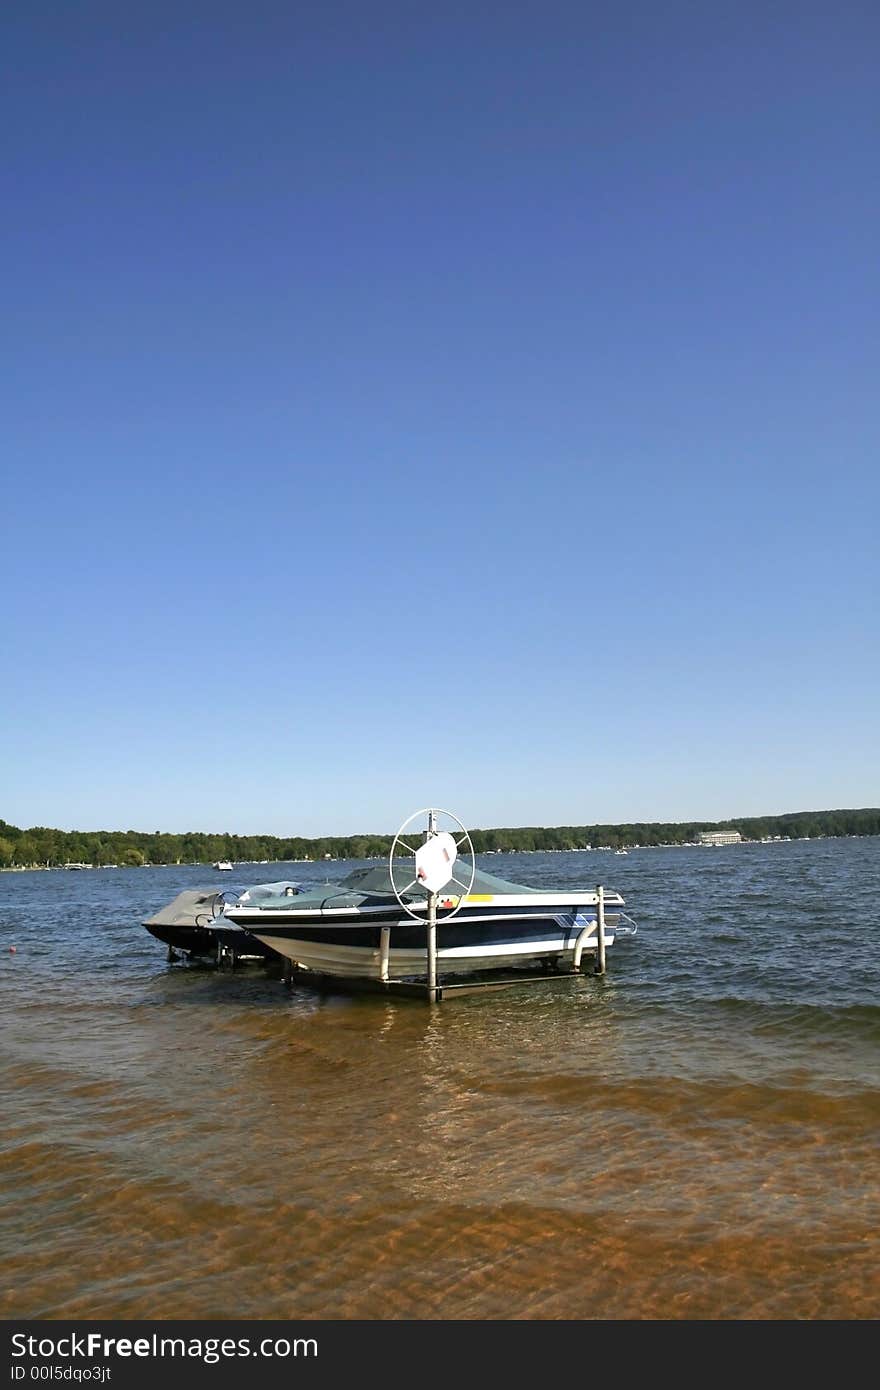 Motor boats anchored by the lake shore. Motor boats anchored by the lake shore